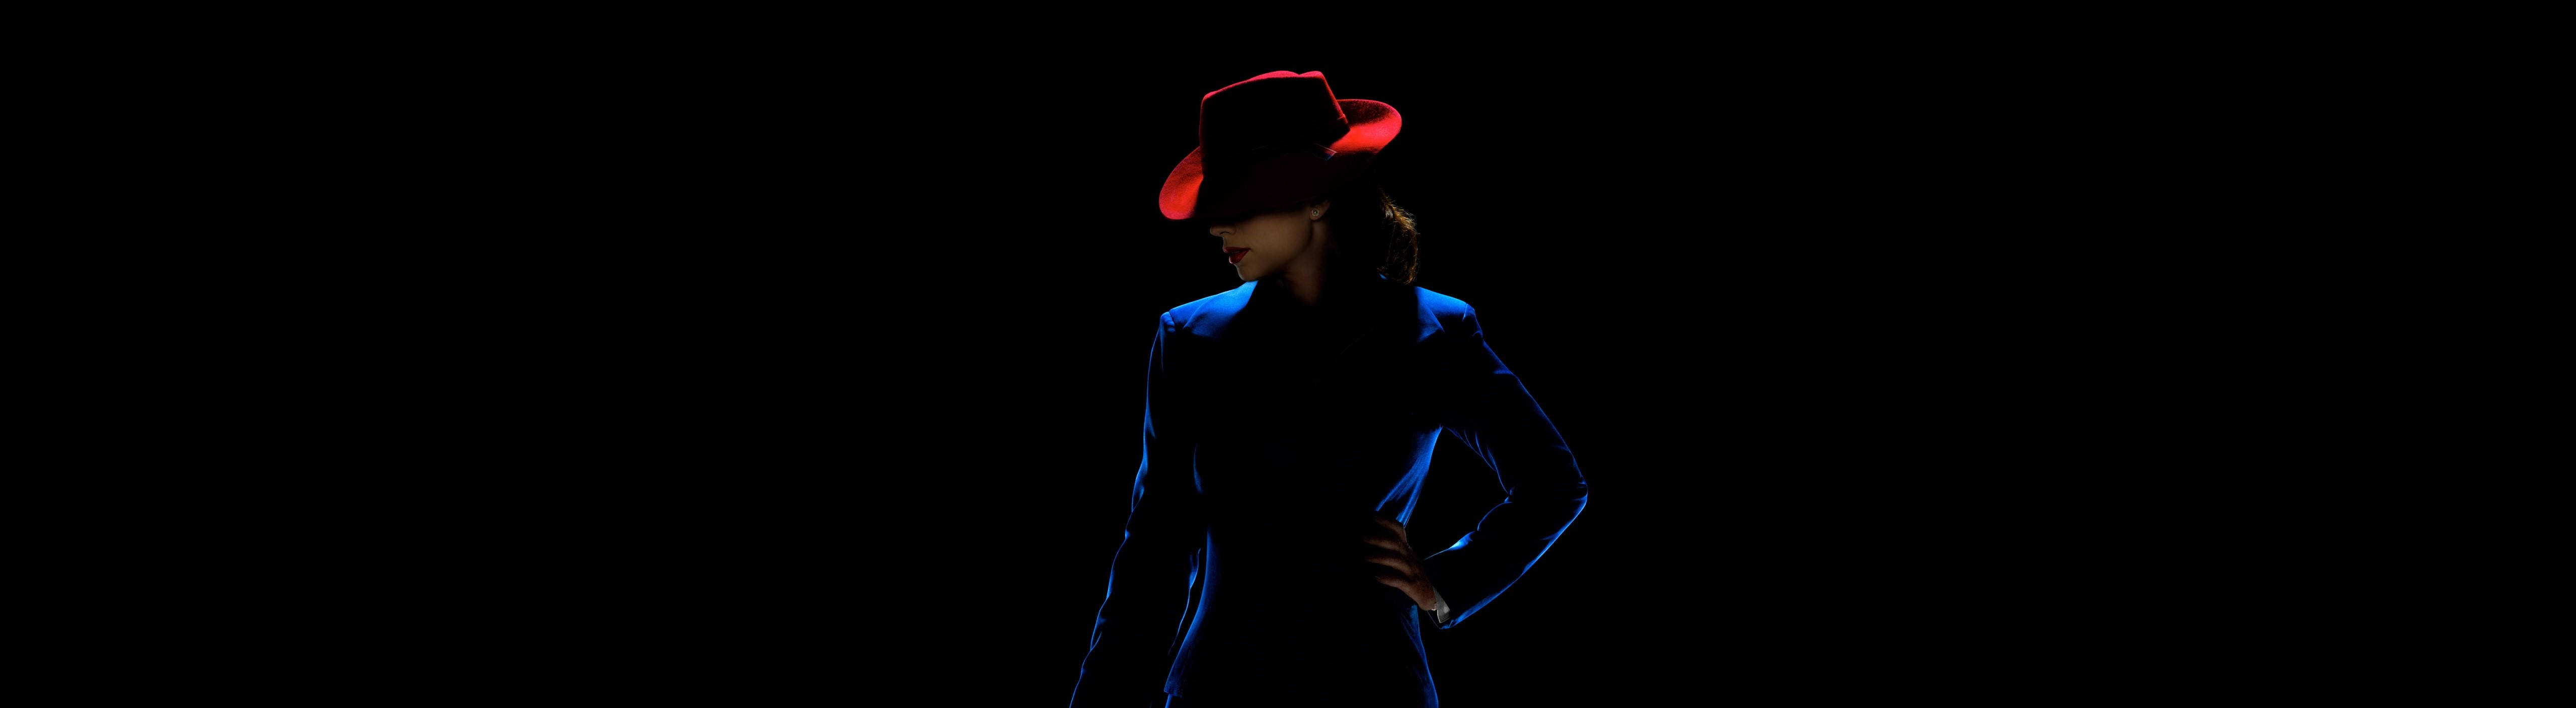 Marvel's Agent Carter 5120 X 1440 Background